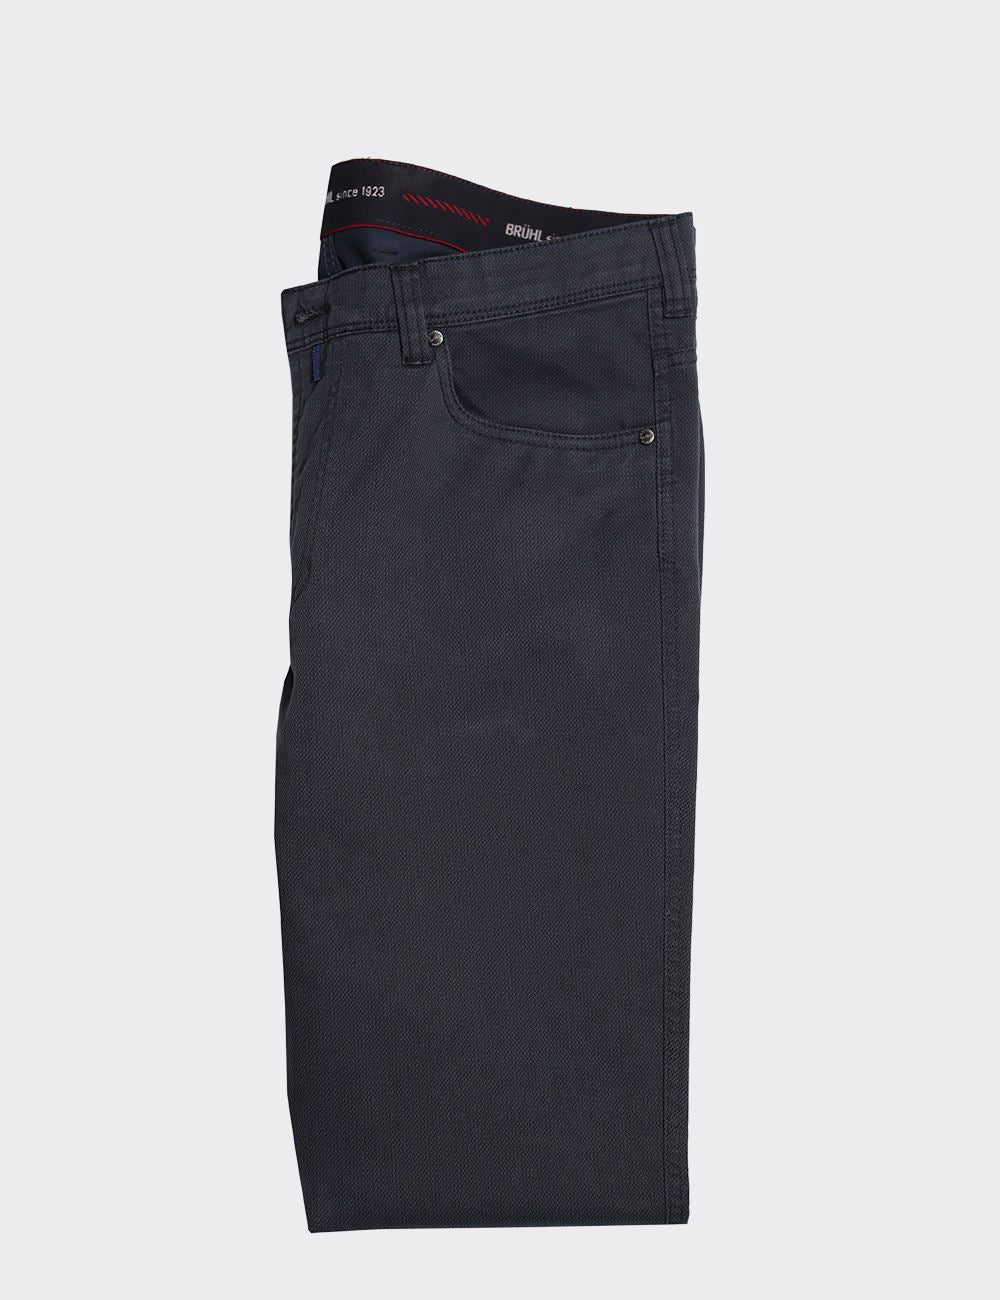 Bruhl Denim Trousers | Navy Blue Jeans